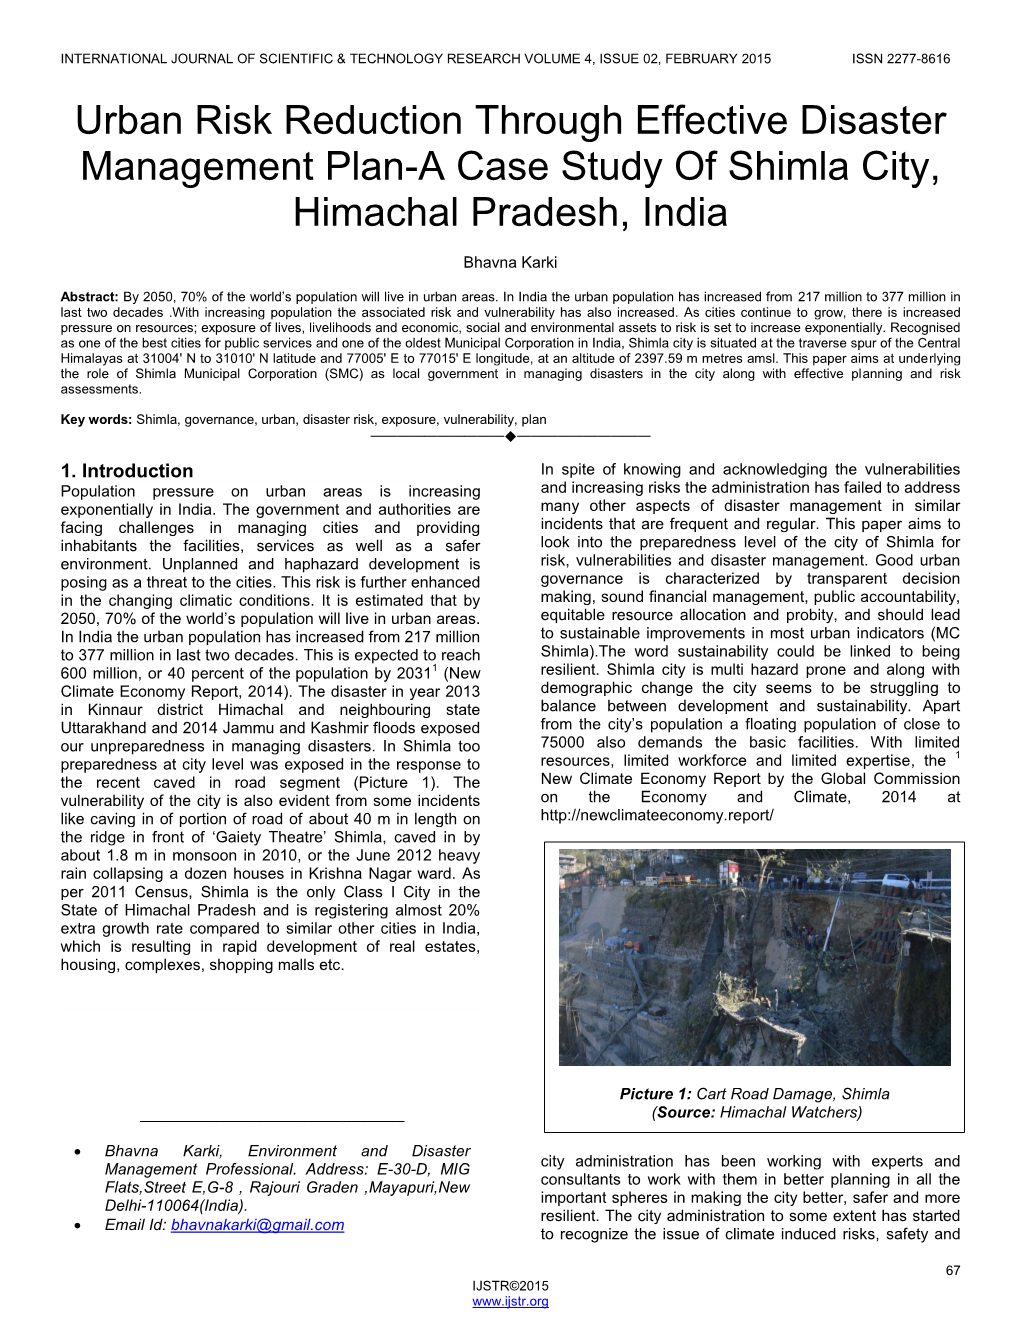 Urban Risk Reduction Through Effective Disaster Management Plan-A Case Study of Shimla City, Himachal Pradesh, India